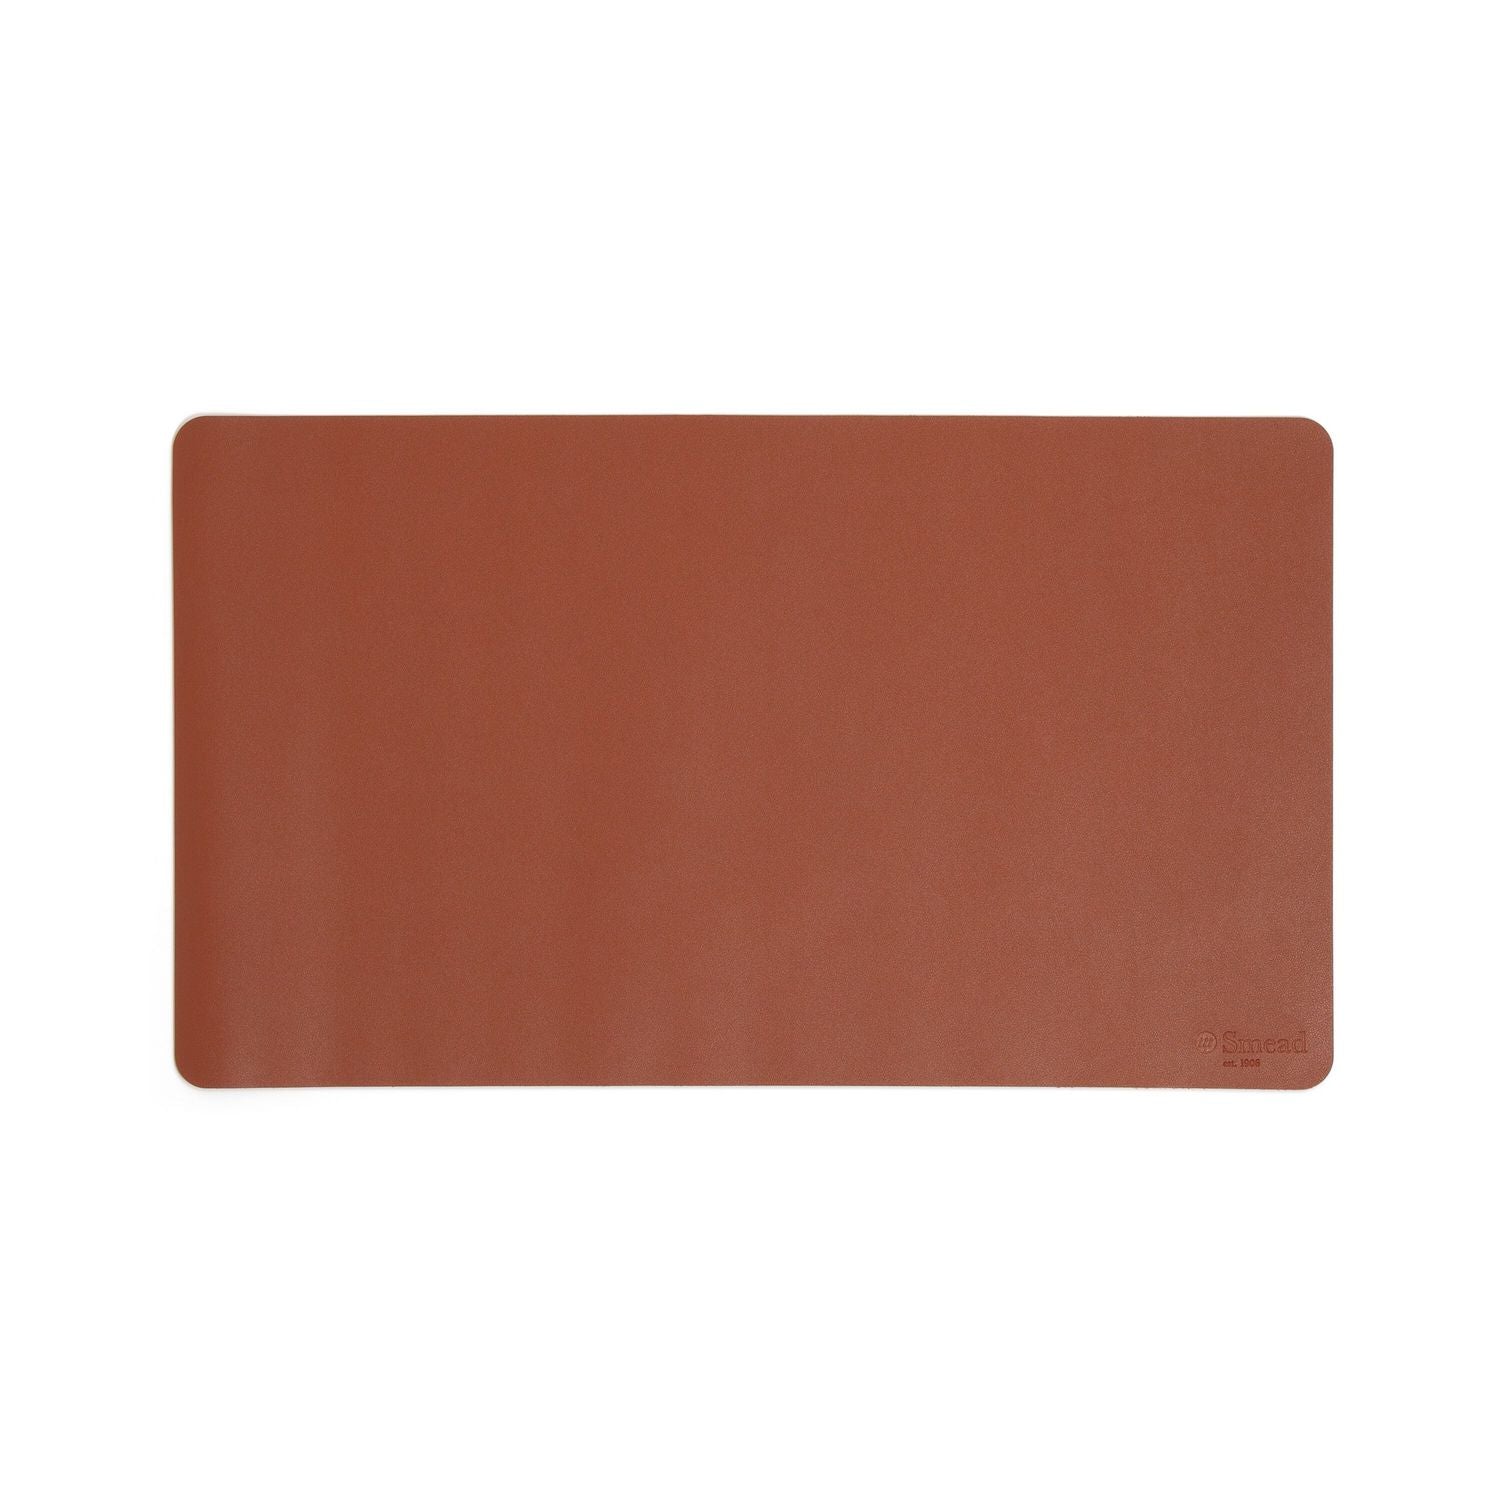 vegan-leather-desk-pads-236-x-137-brown_smd64837 - 1